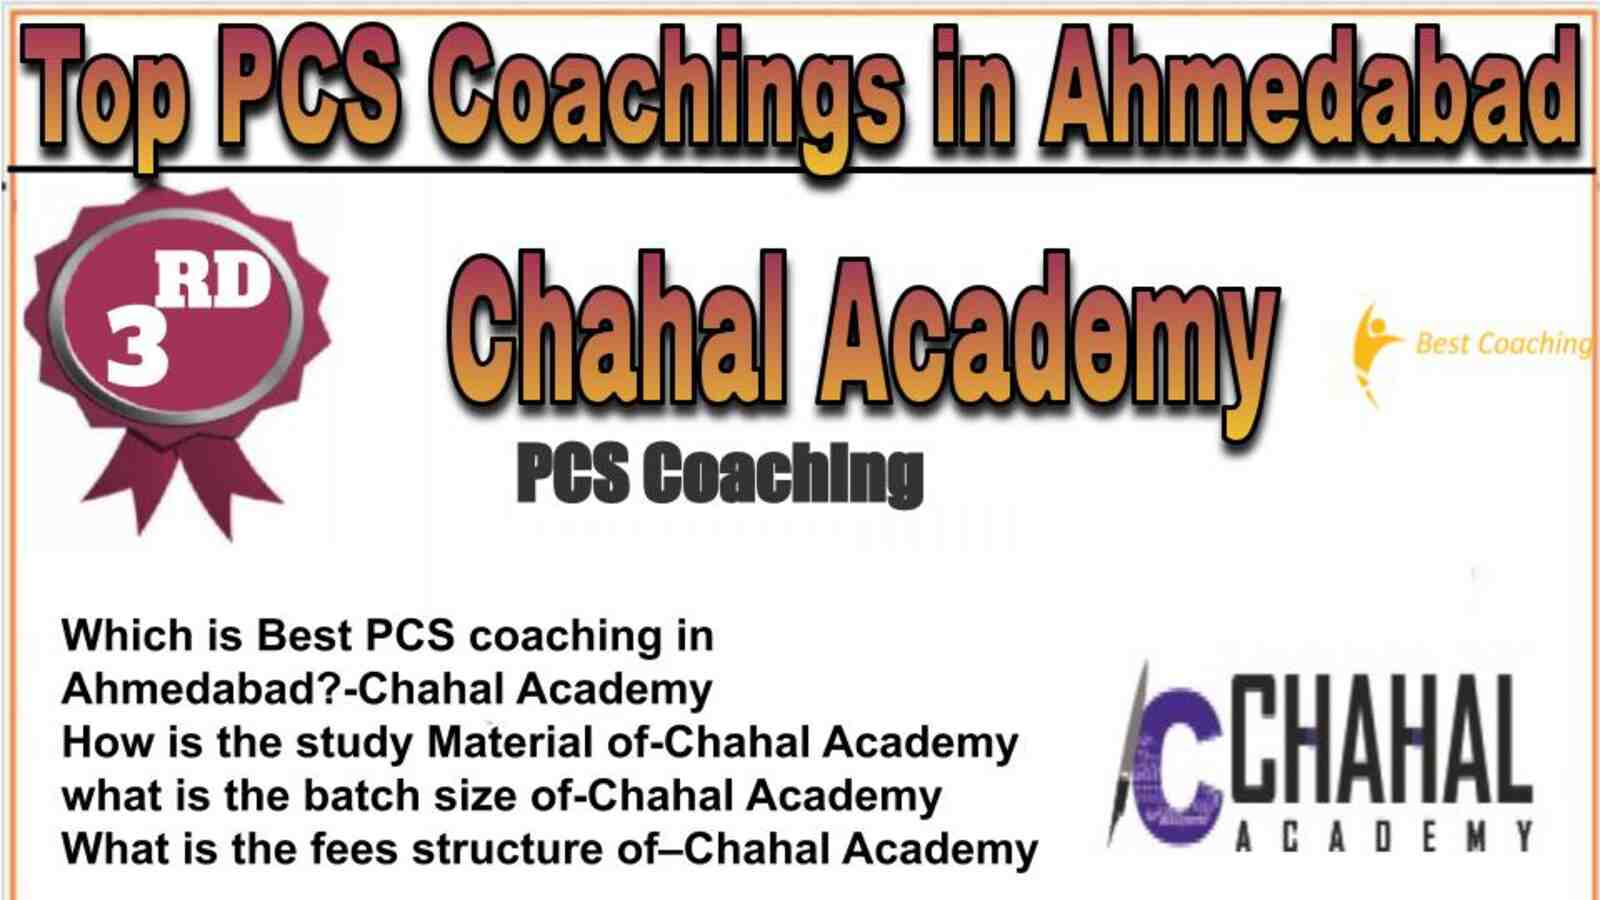 Rank 3 top PCS coachings in Ahmedabad